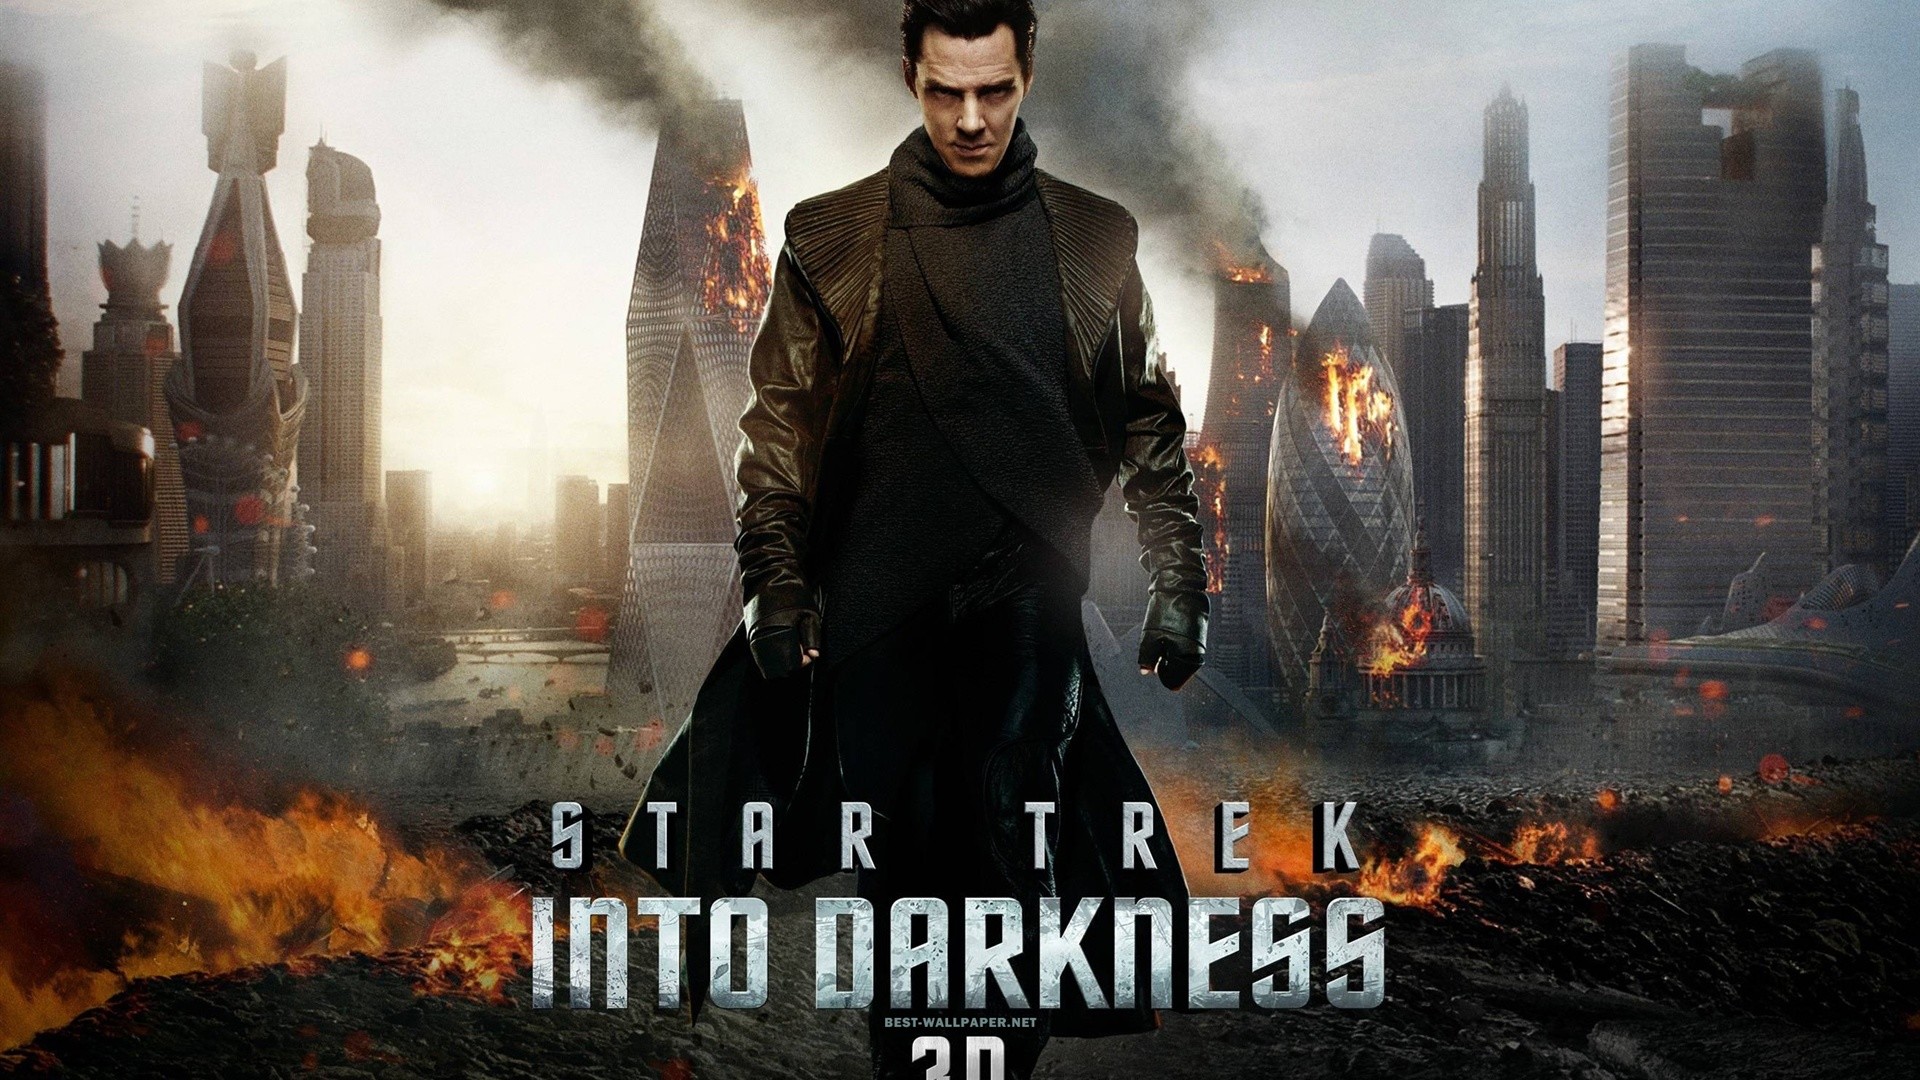 Star Trek Into Darkness Cast